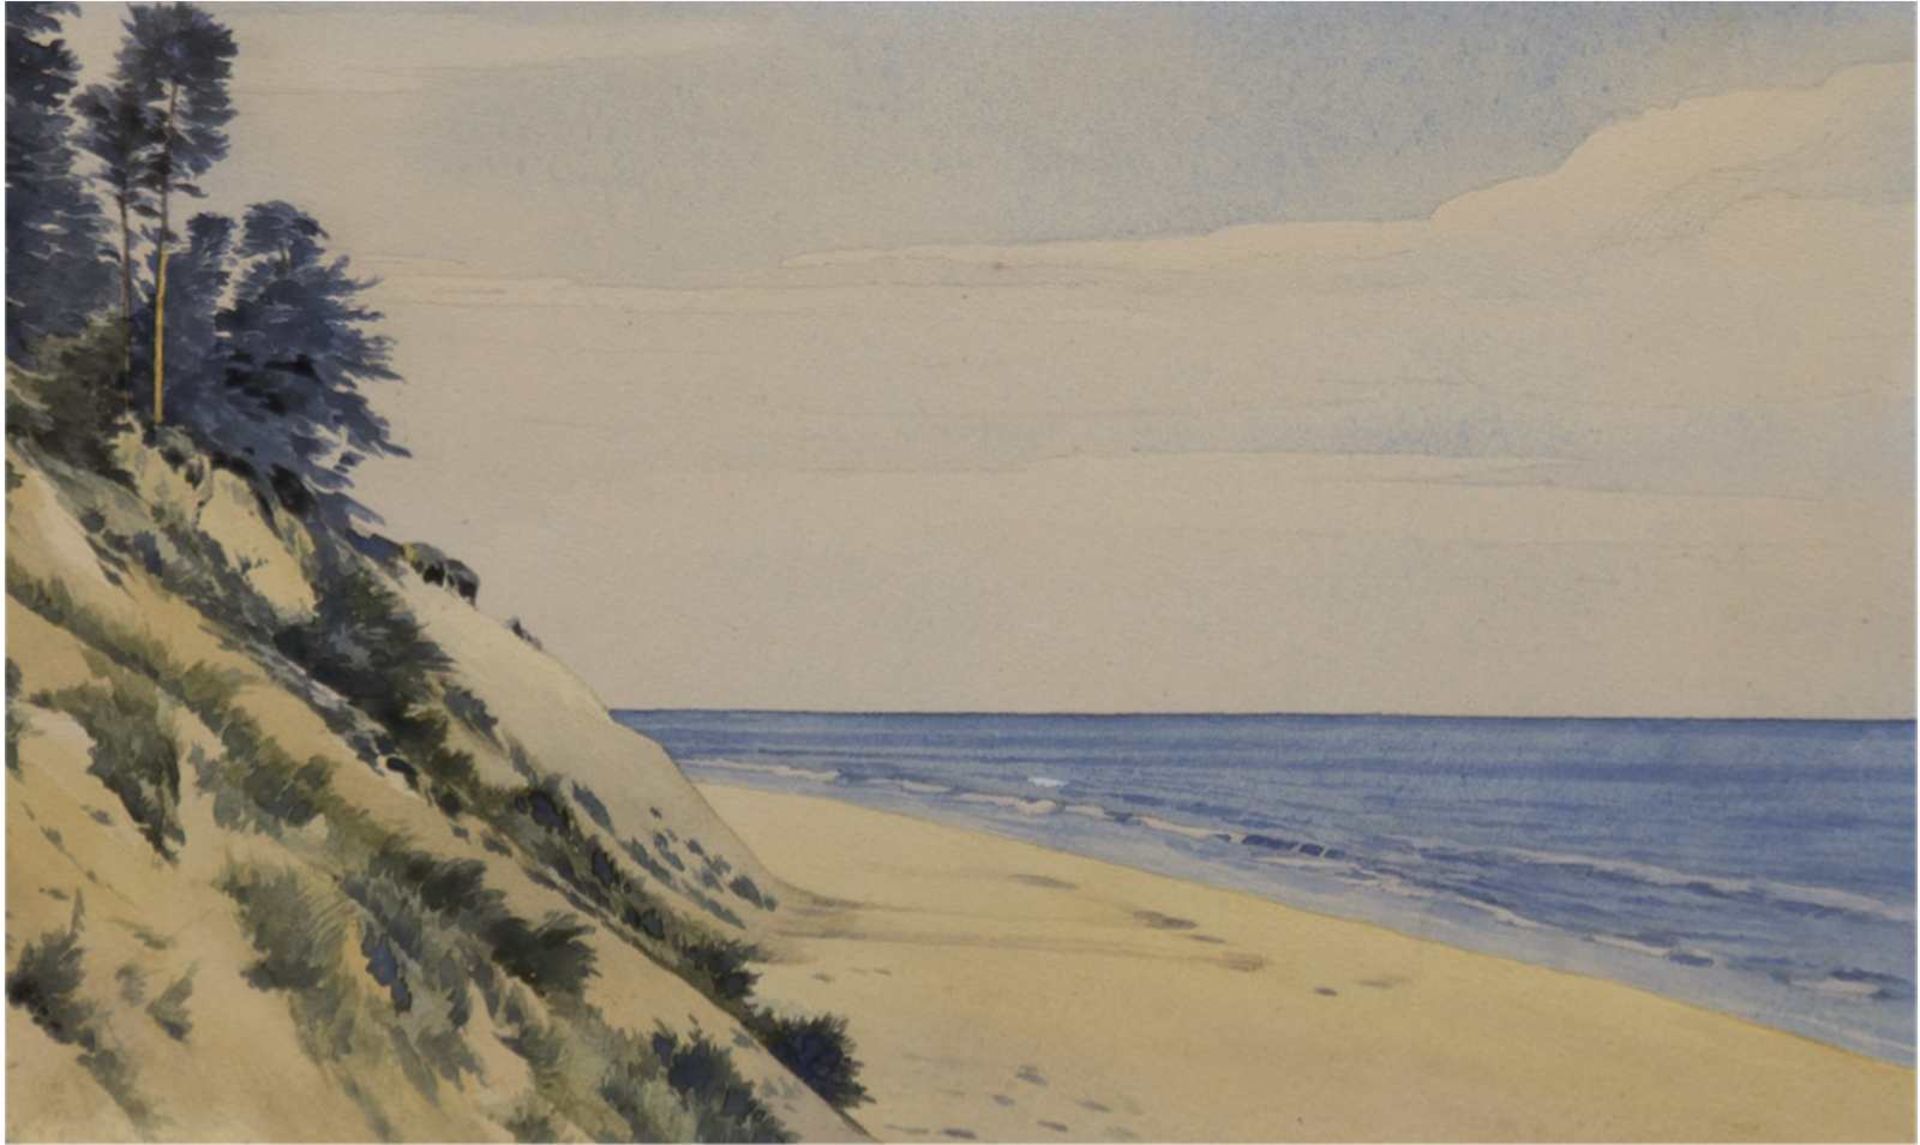 "Steilküste", Aquarell/Papier, rückseitig bez. "Hein Ross", 19x29 cm, im Passepartout